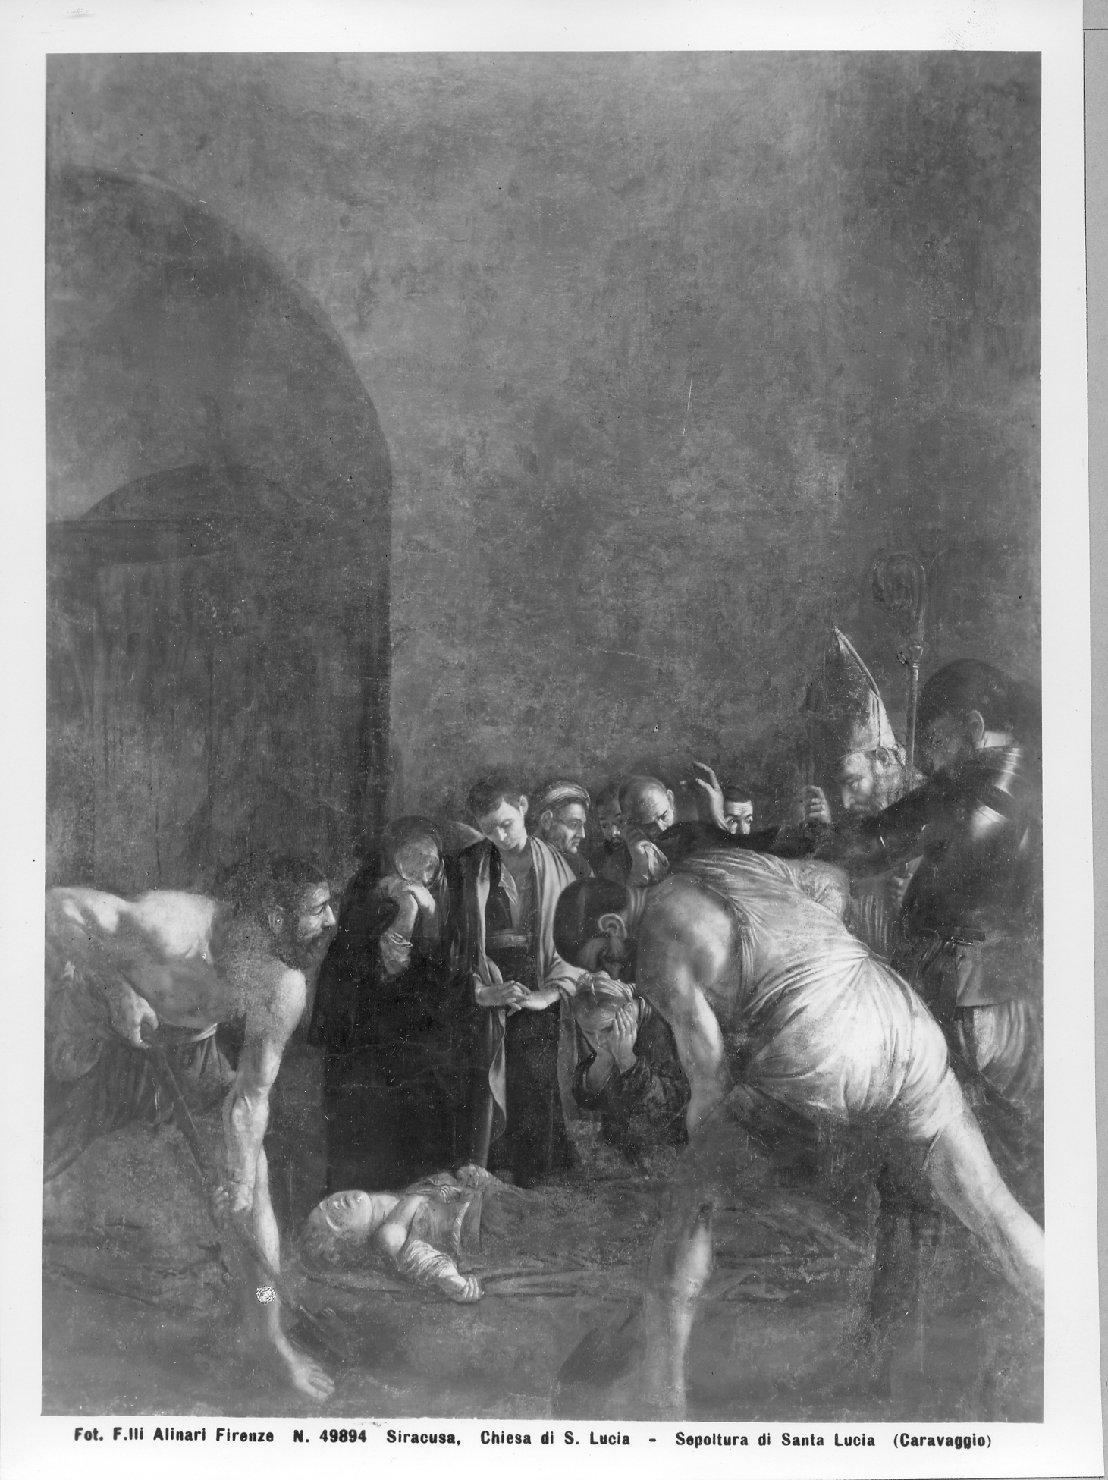 Fratelli Alinari I.D.E.A. S.p.A., Siracusa, Chiesa di S. Lucia - Sepoltura di Santa Lucia (Caravaggio), 1920-1950, gelatina bromuro d'argento/ carta, 00458942